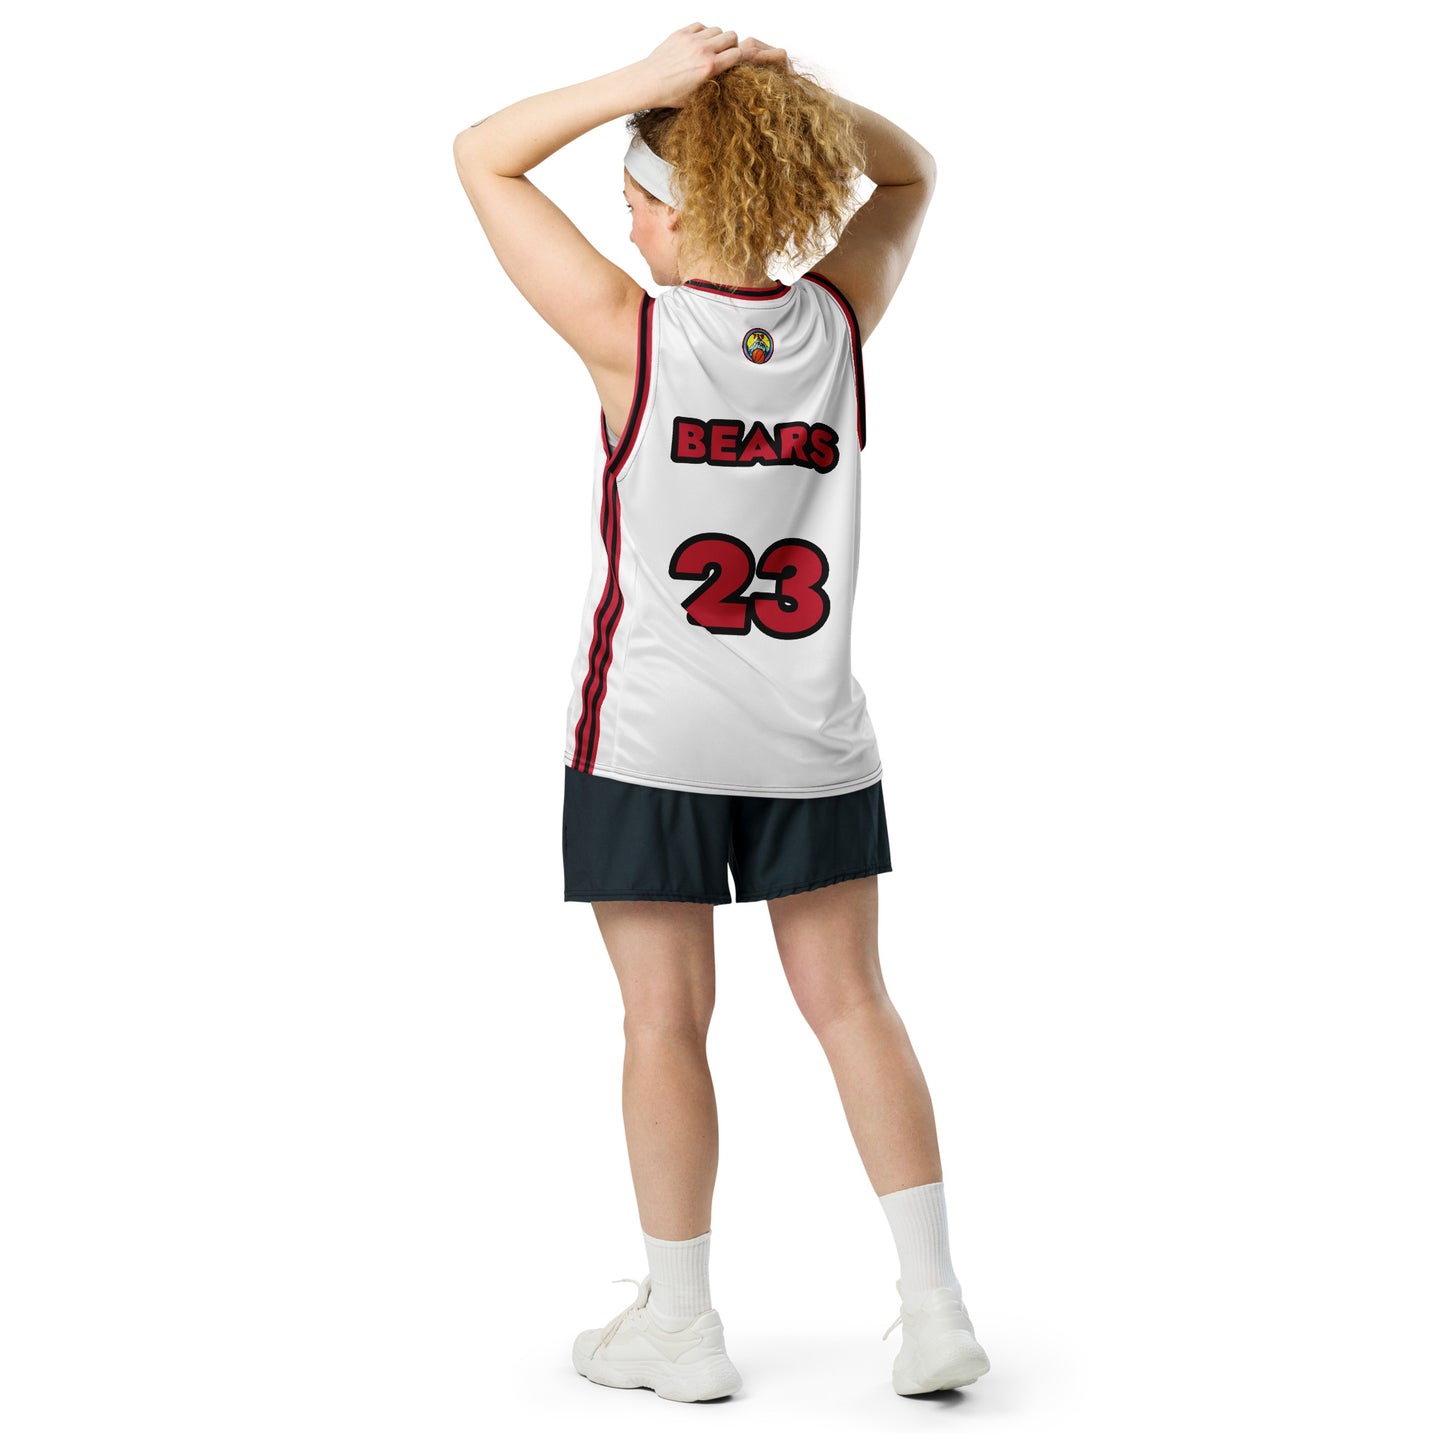 Big Bear Basketball Jersey [AWAY] (#23)